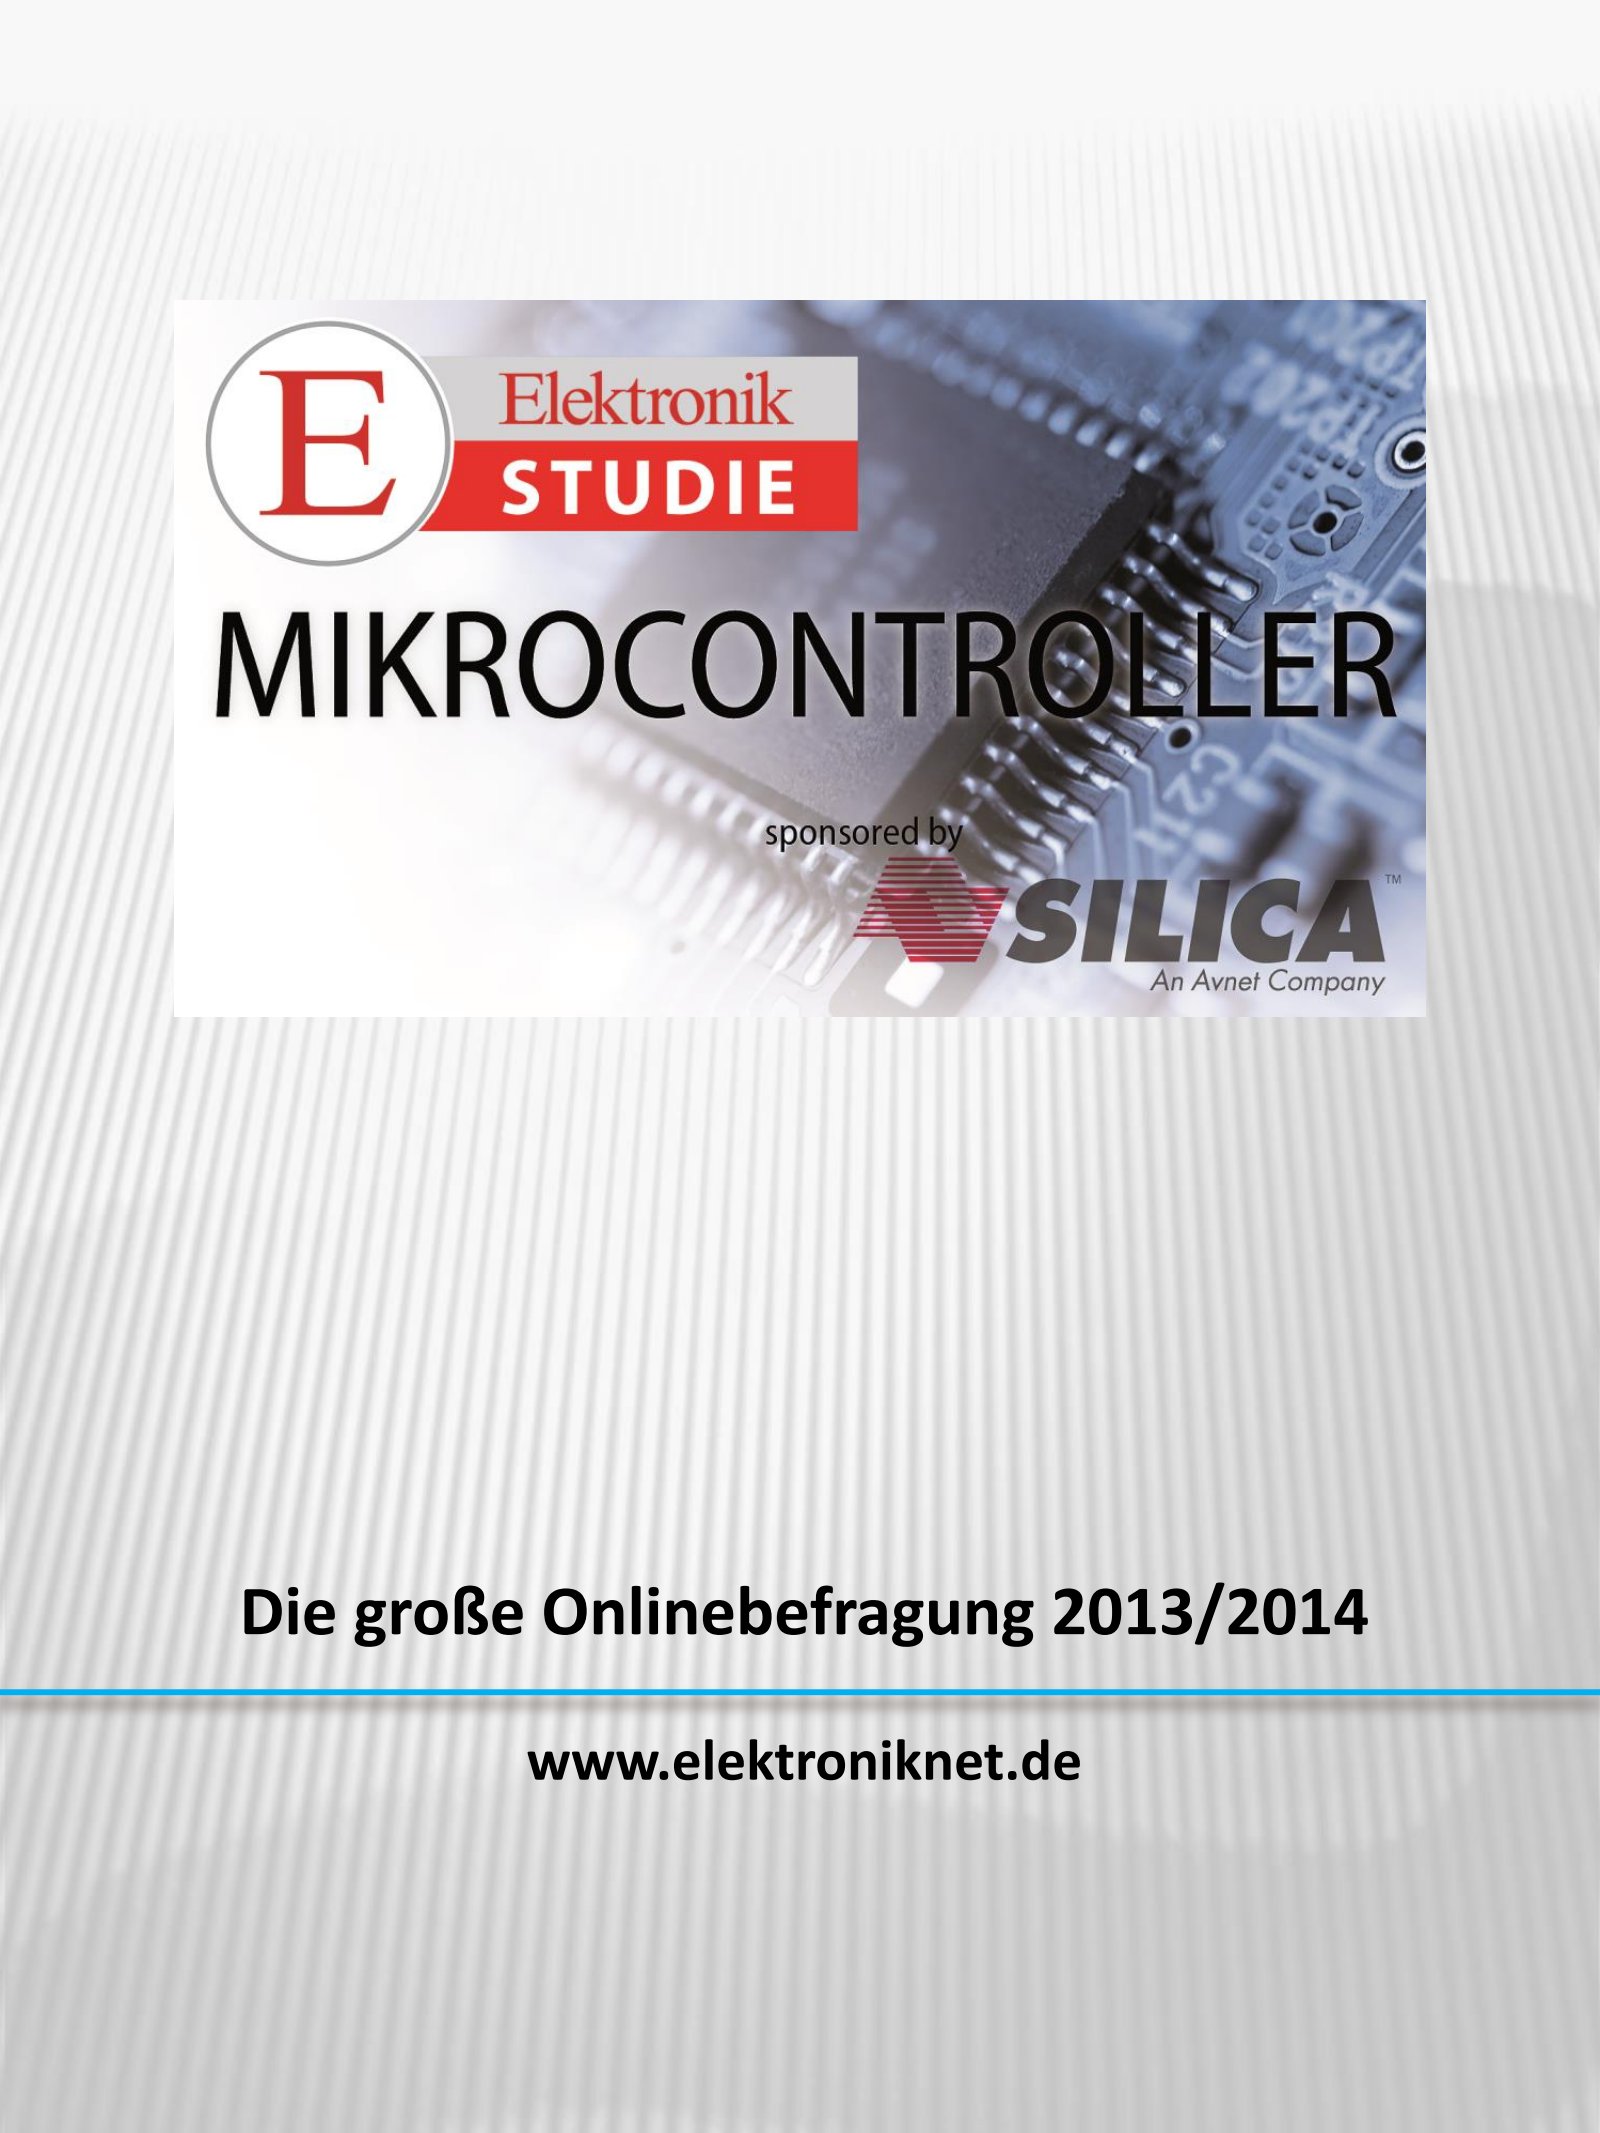 Elektronik Studie Mikrocontroller 2013/2014 Digital